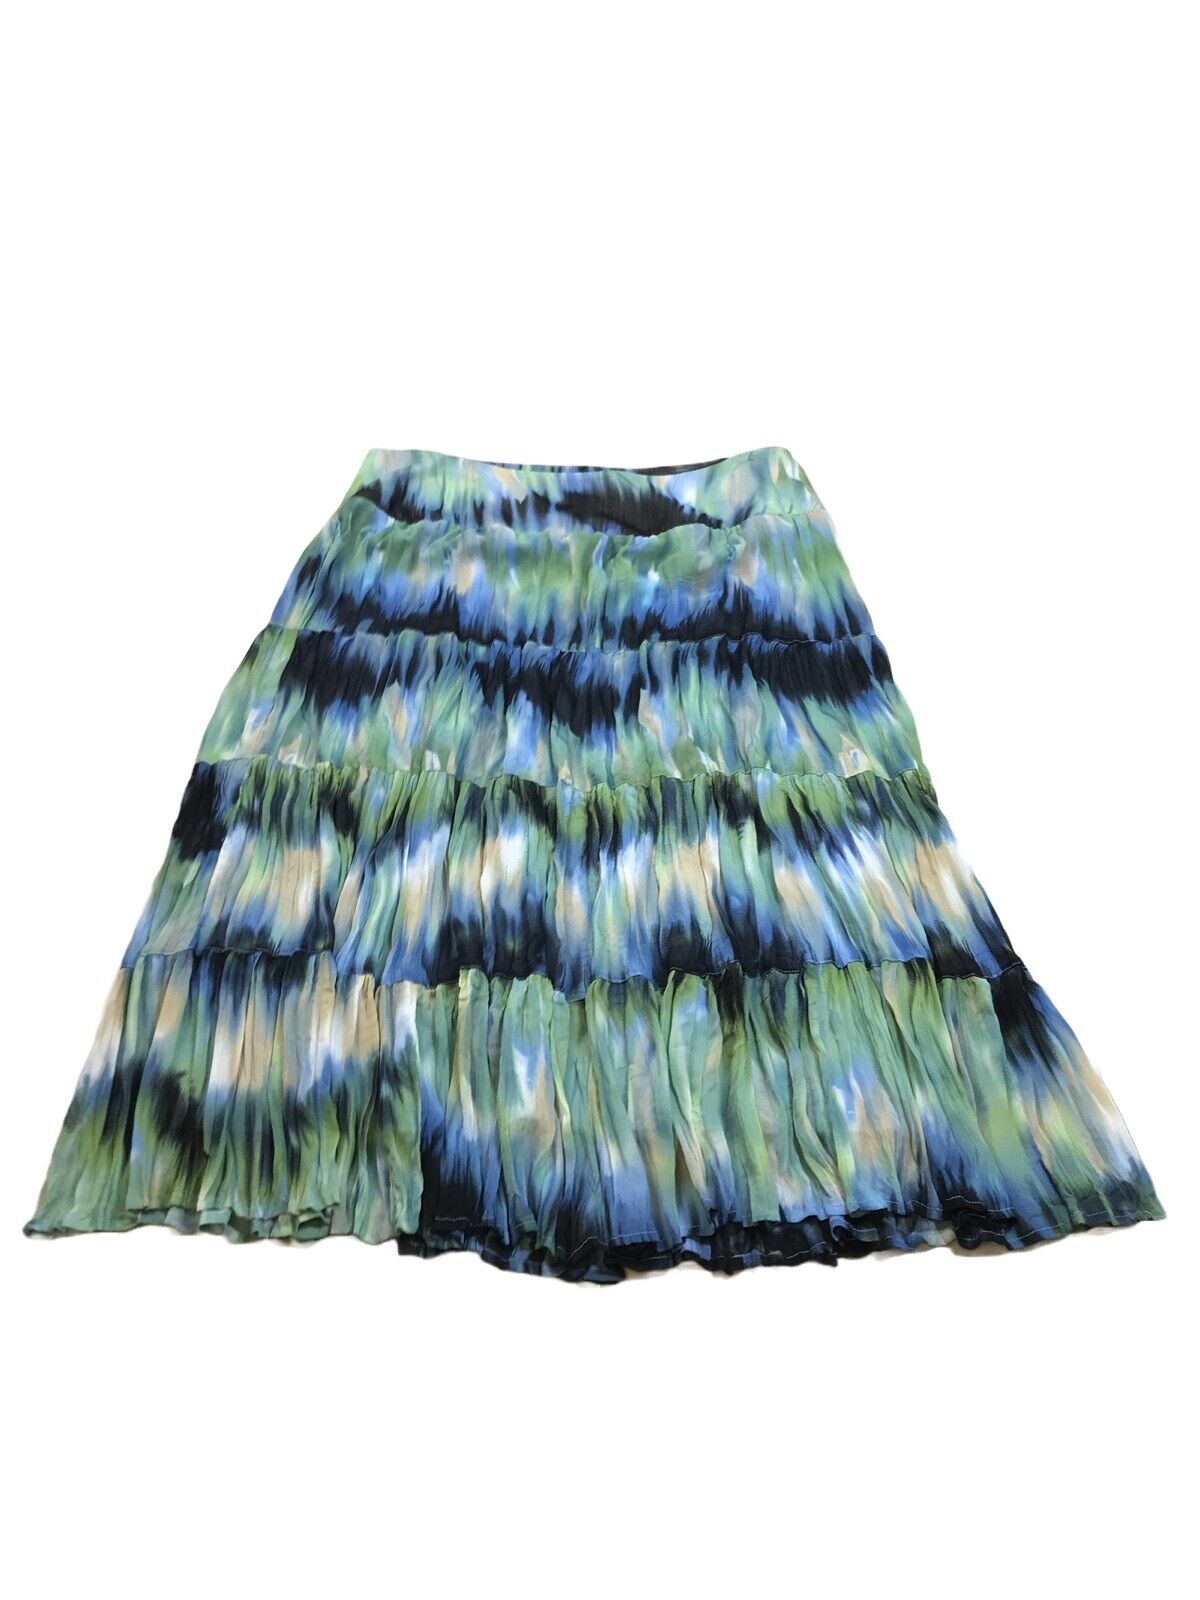 NEW Christopher and Banks Women's Blue/Green Flowy Midi Skirt - 12